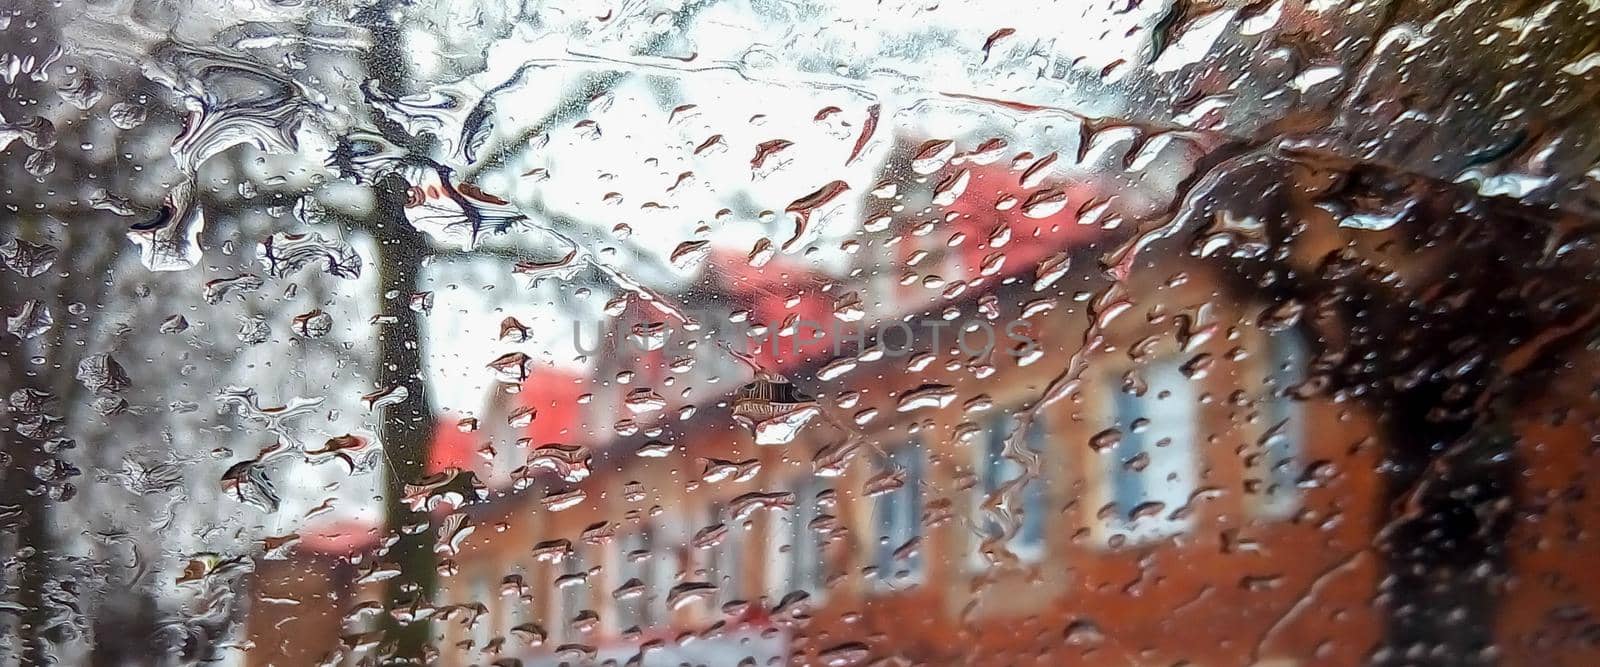 Raindrops on window glass. Rainy city background by lapushka62